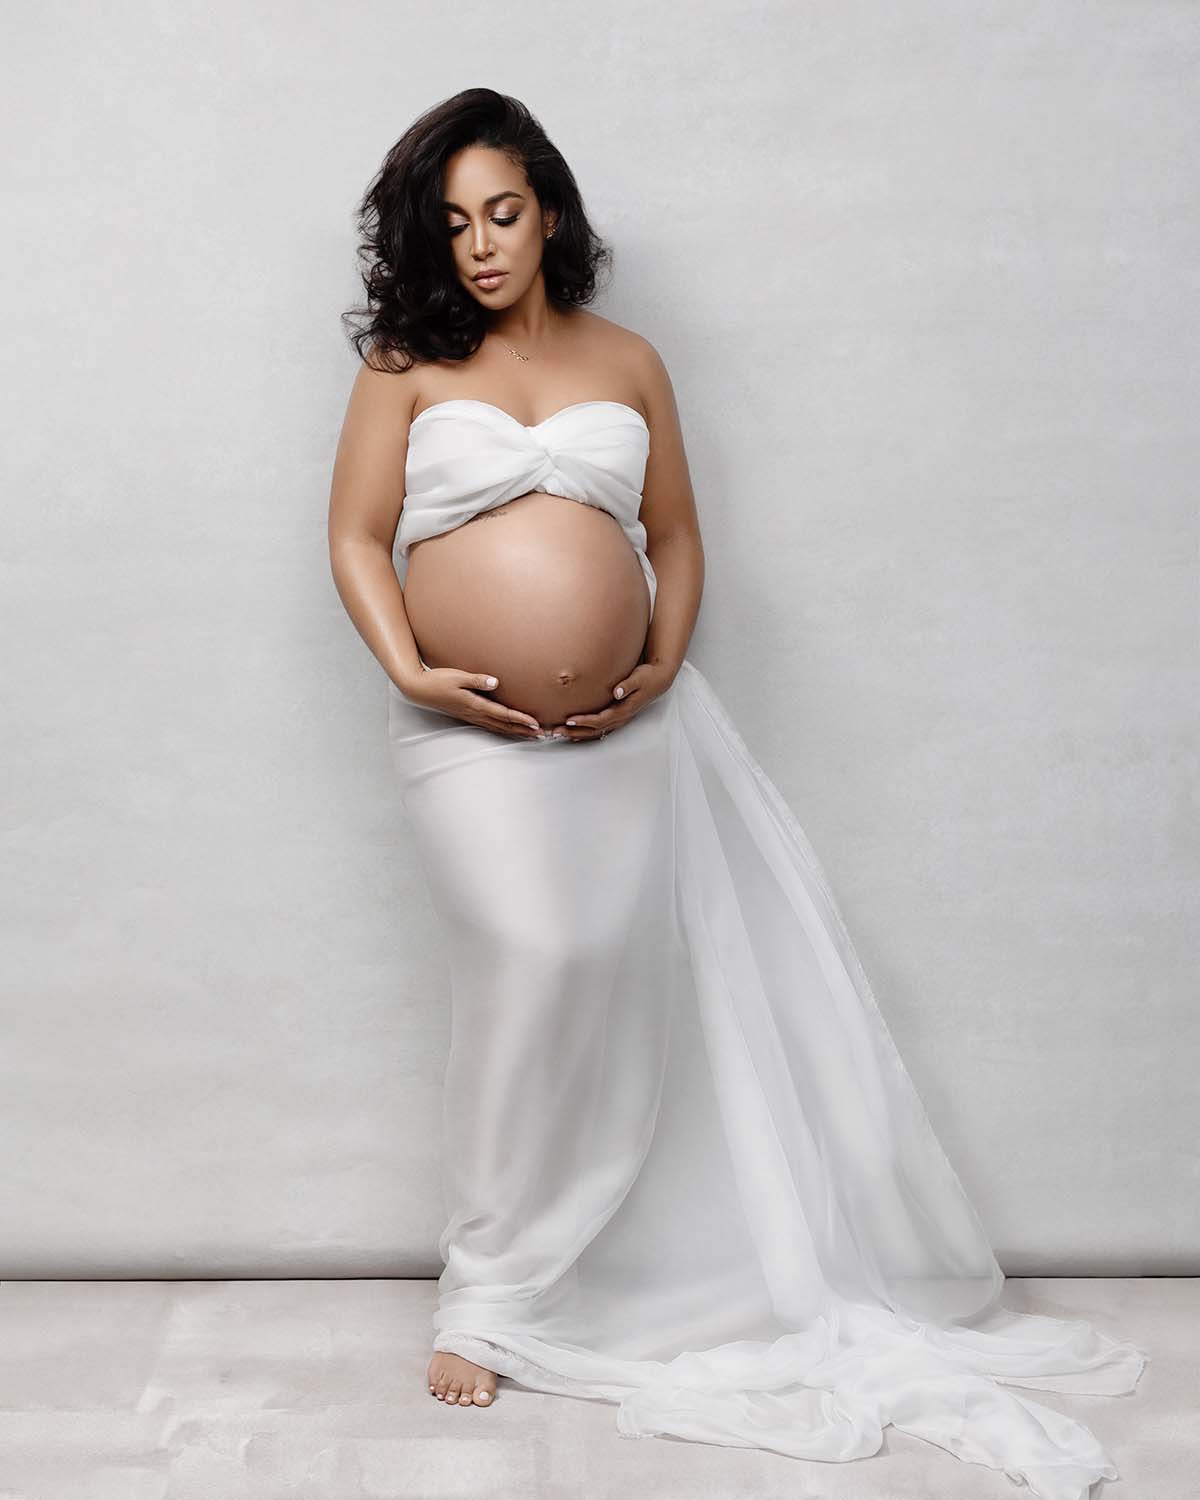 studio maternity photography maryland, baby bump photographer Baltimore, pregnancy photography baltimore